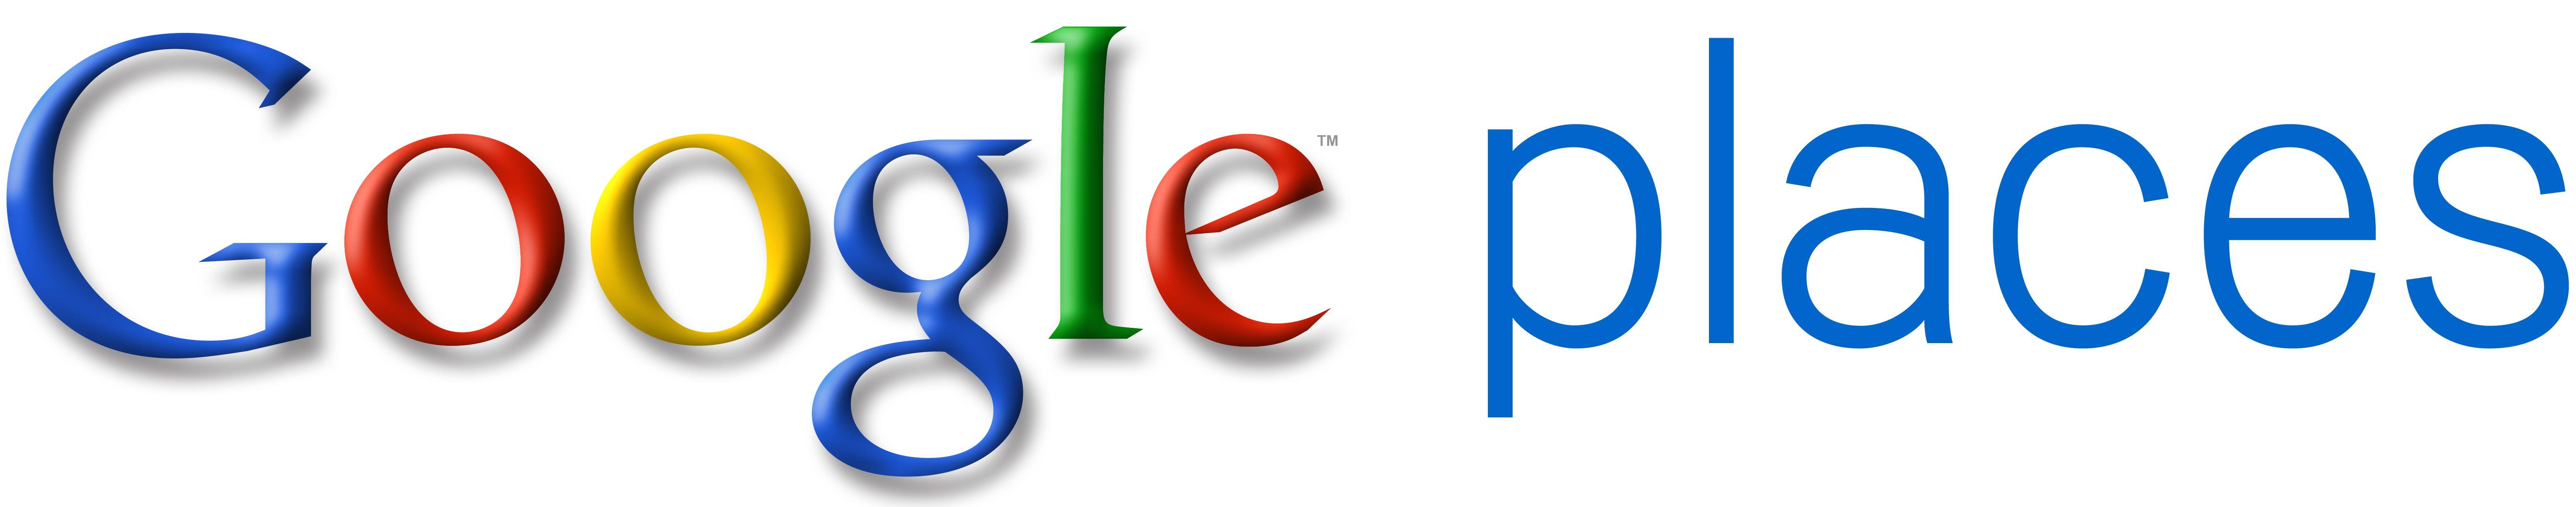 Google Places Logo - Google Places - Tenzo